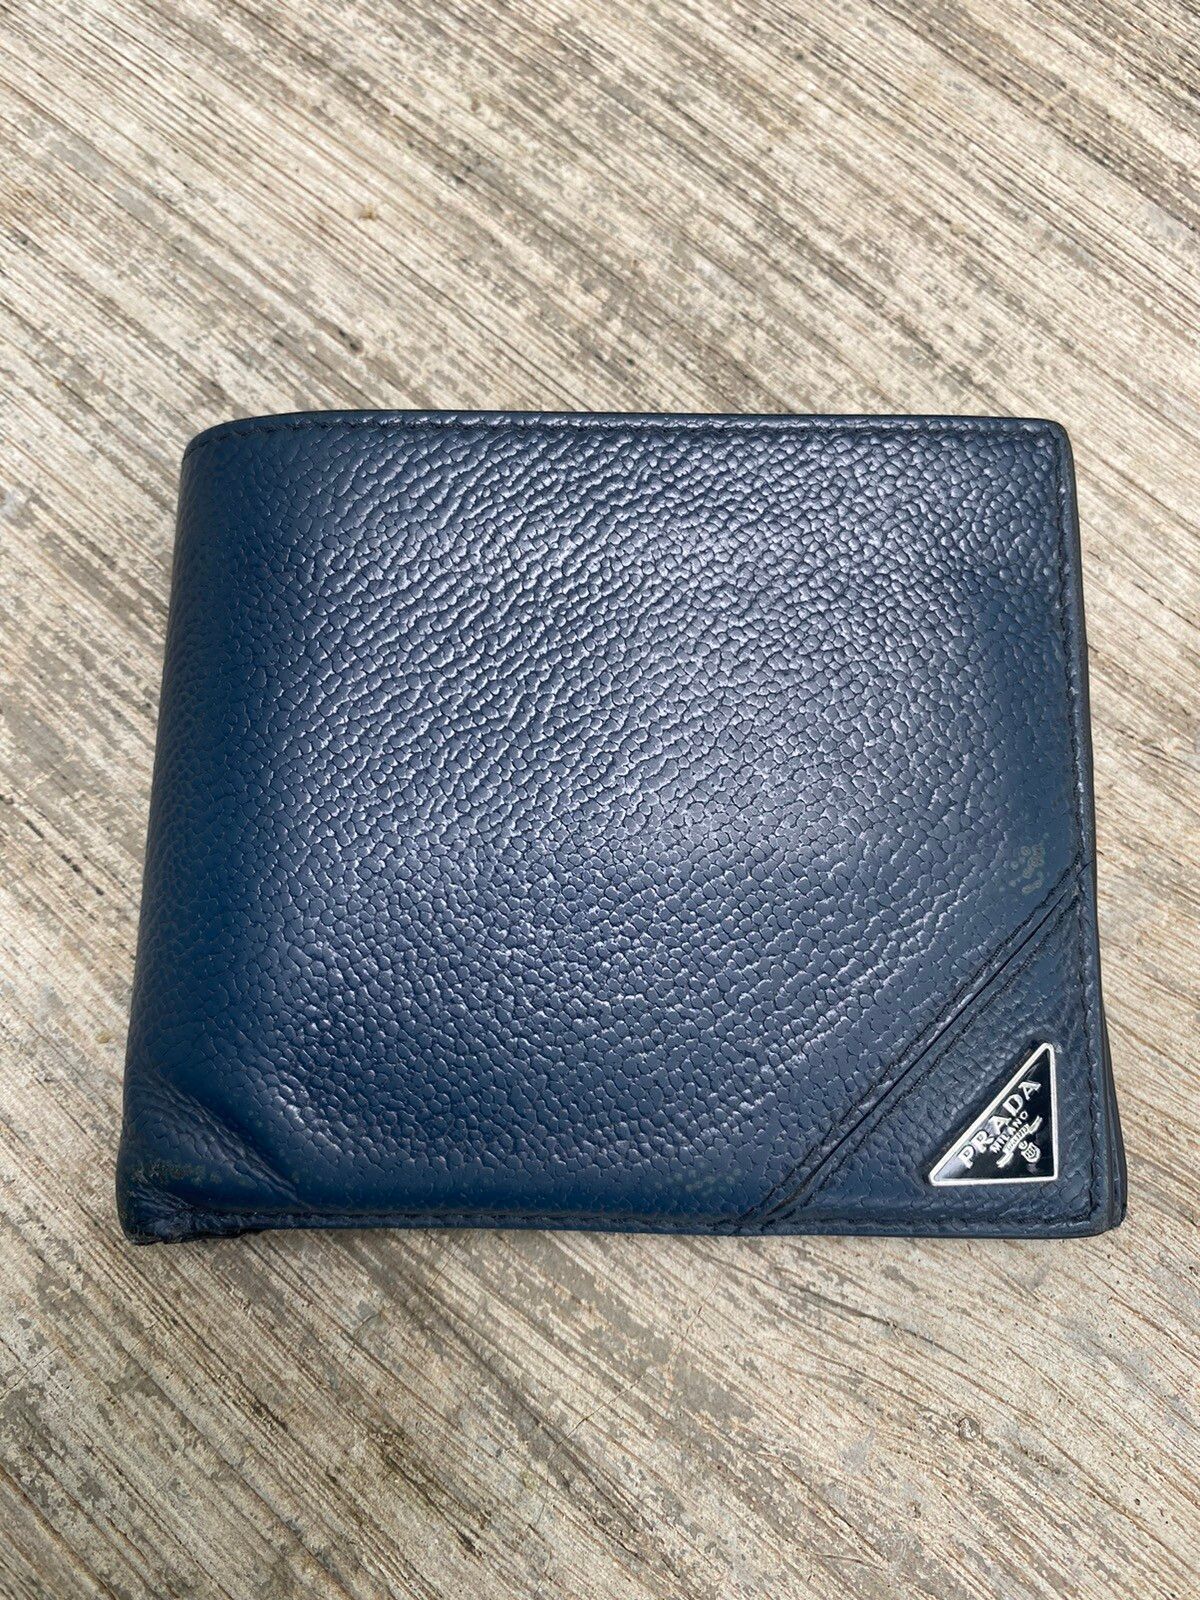 Authentic Prada Bifold Blue Men Wallet - 25